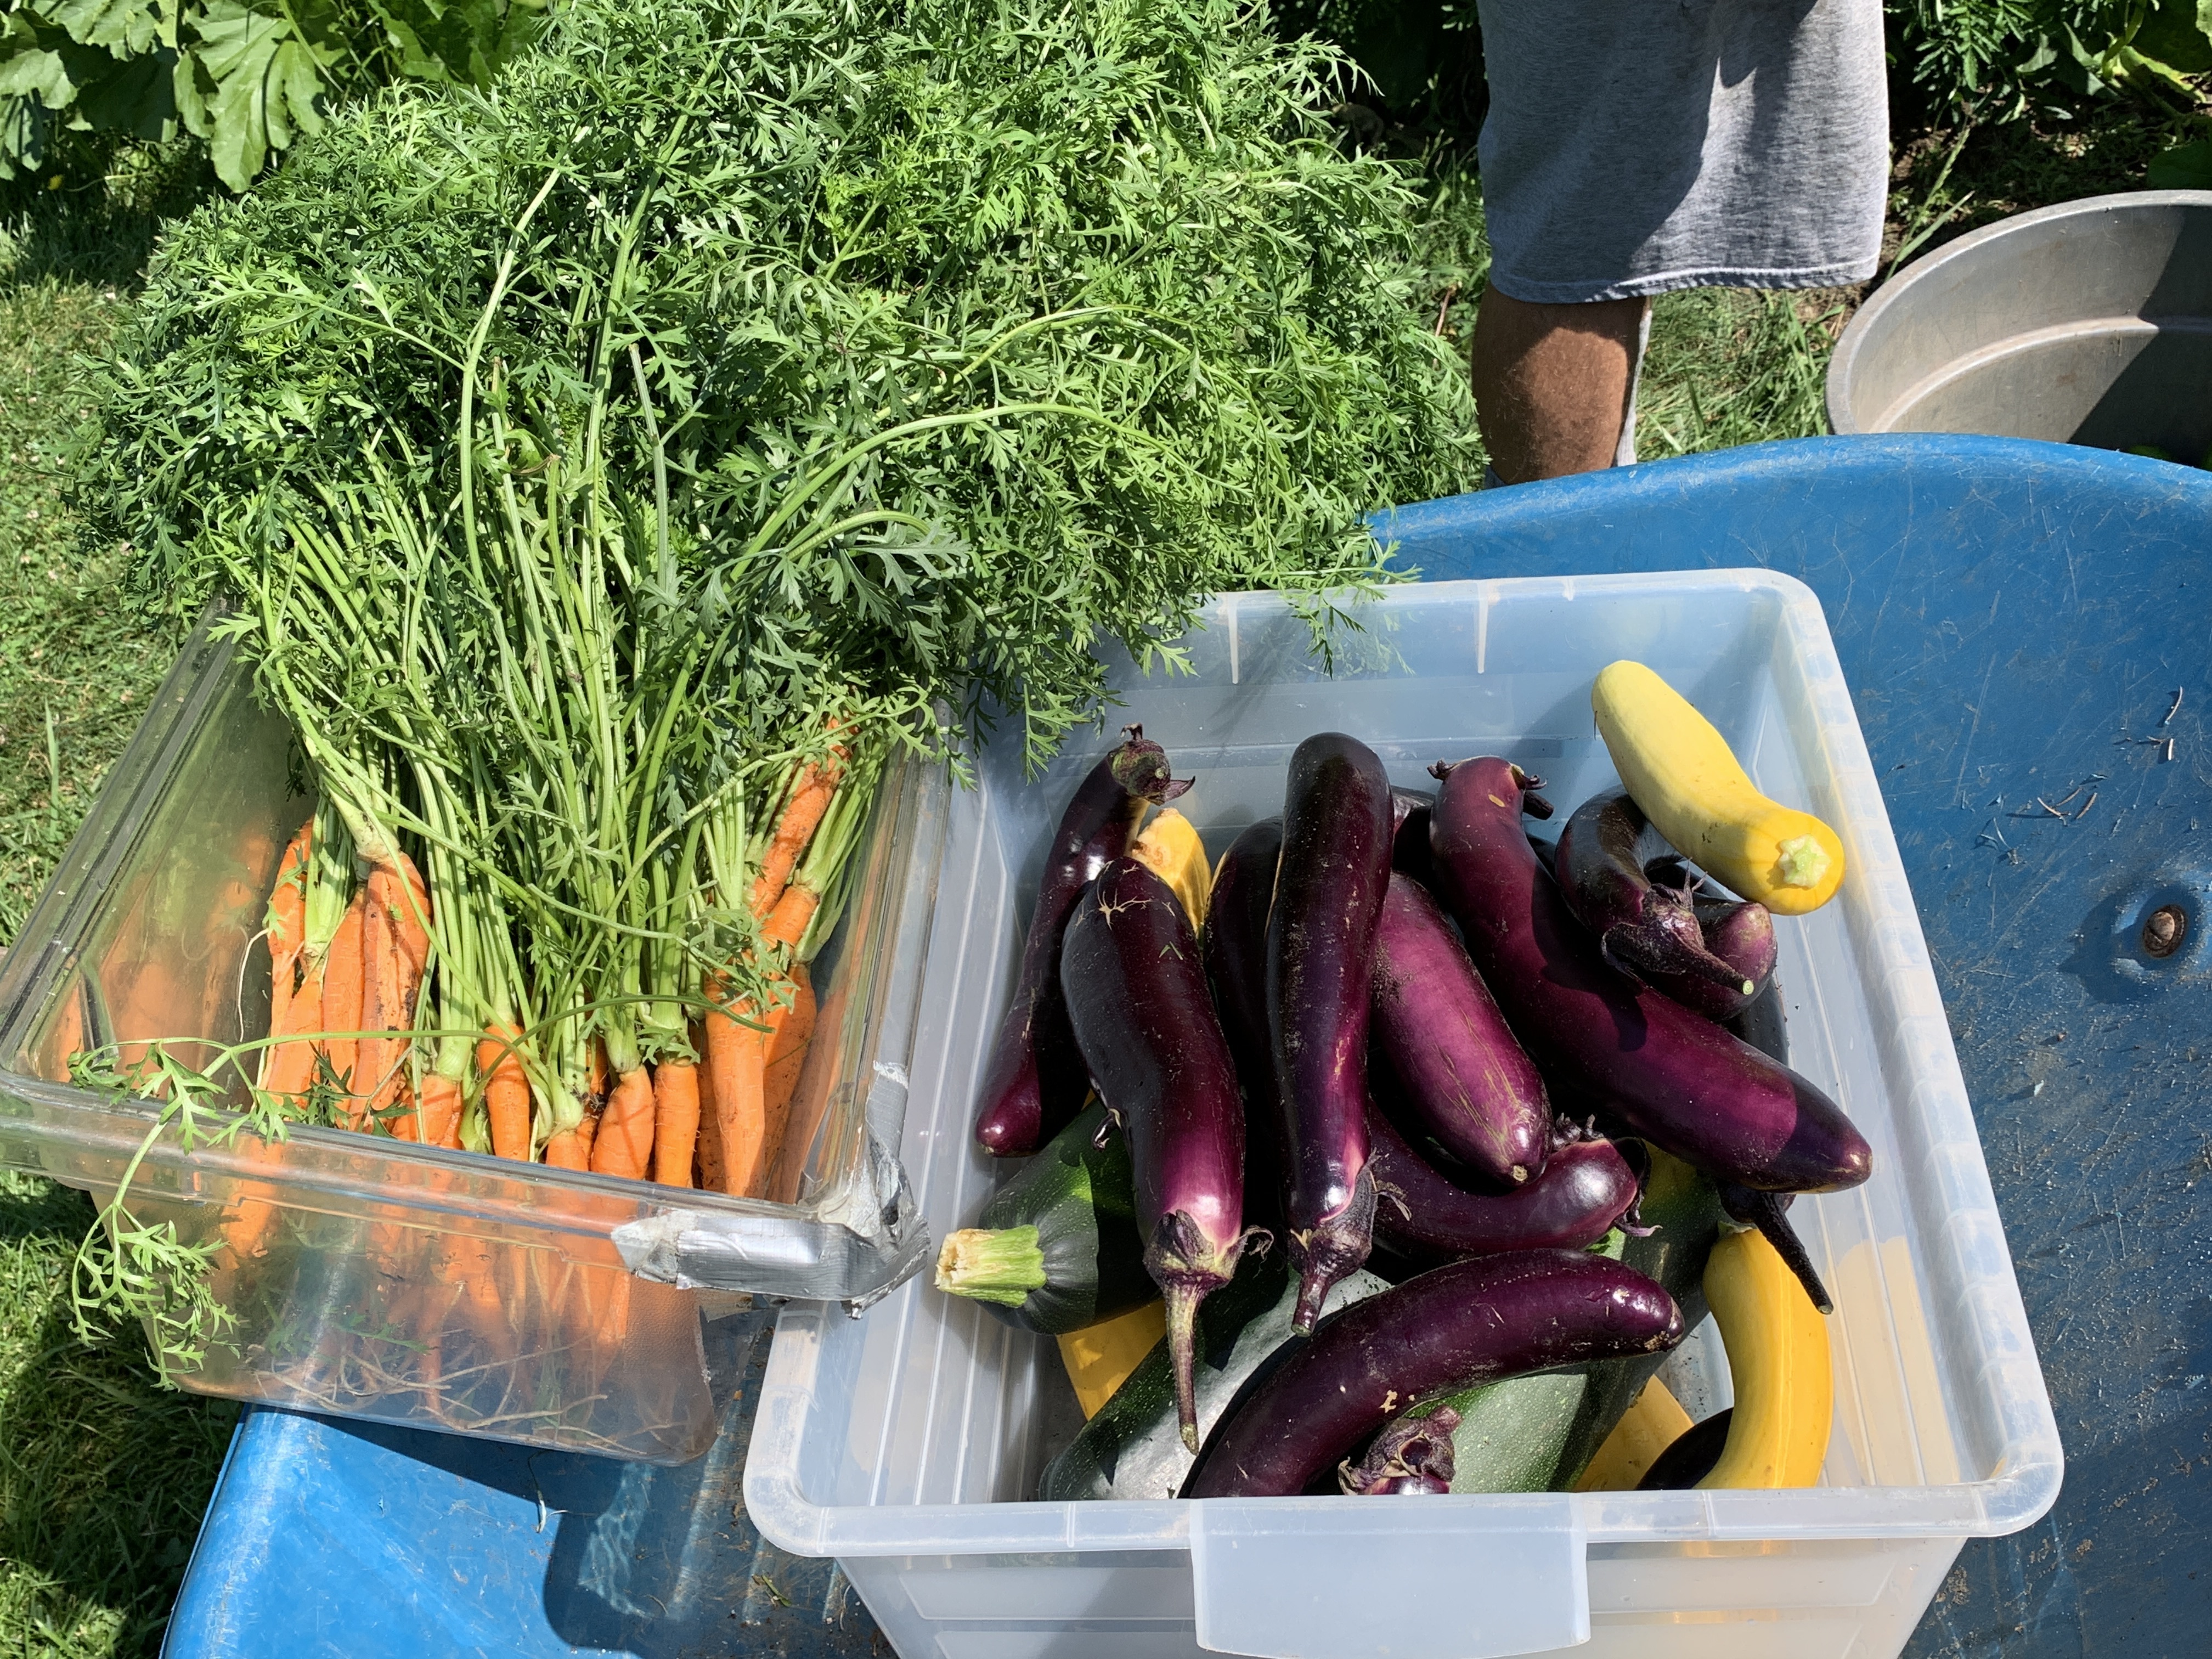 Freshly picked carrots and eggplants